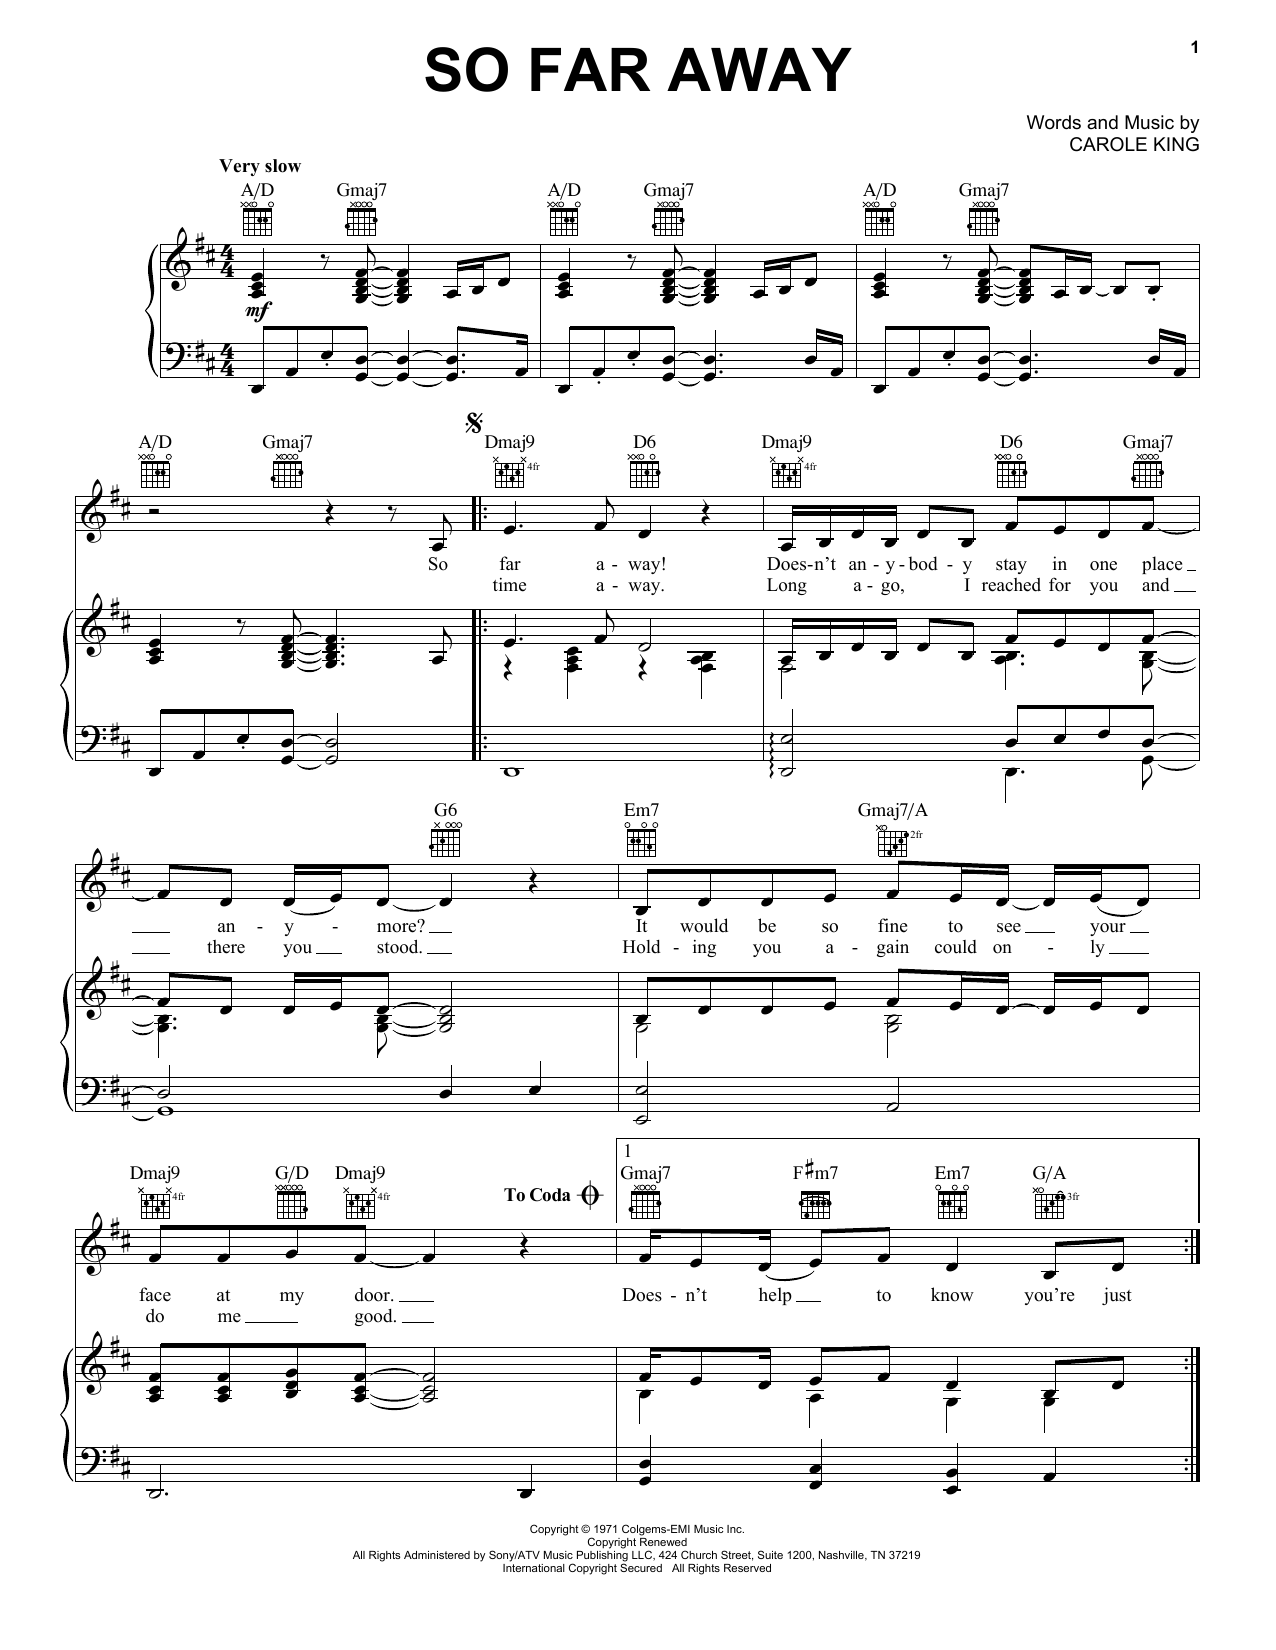 Carole King So Far Away Sheet Music Notes & Chords for Lead Sheet / Fake Book - Download or Print PDF